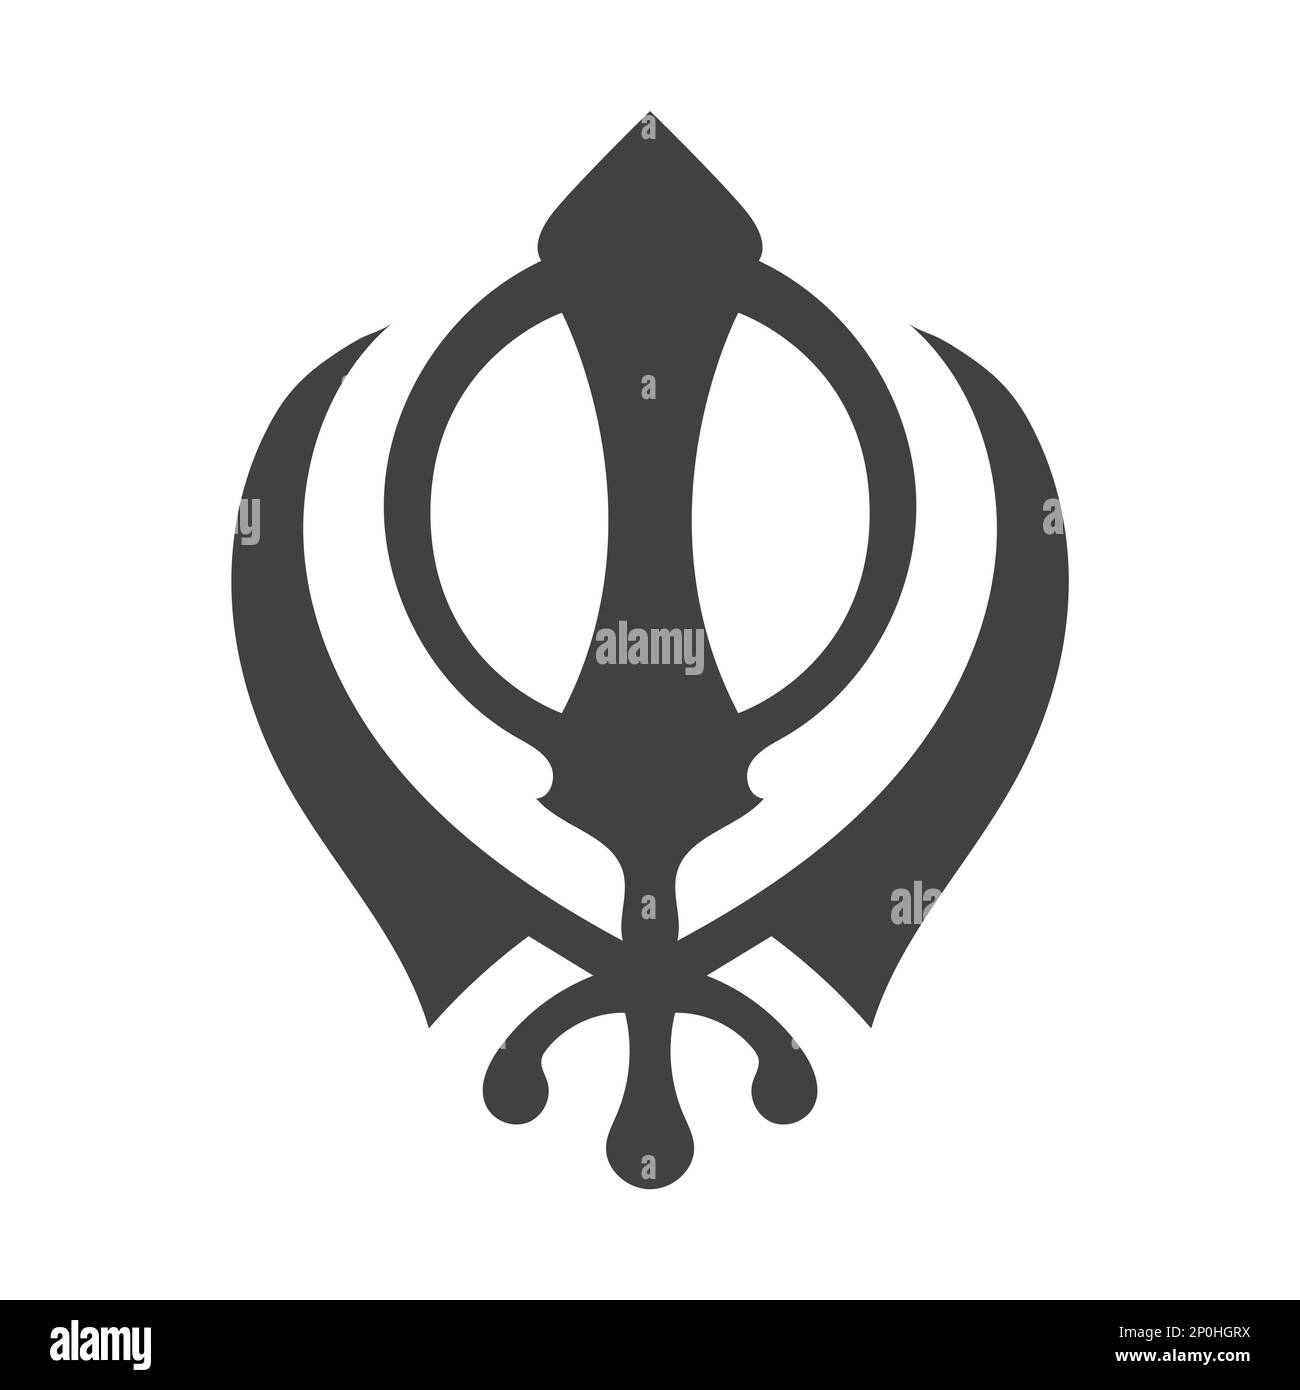 Sikhism segno religioso vettoriale - Sikh dharma simbolo - segni e simboli religiosi vettoriali Illustrazione Vettoriale